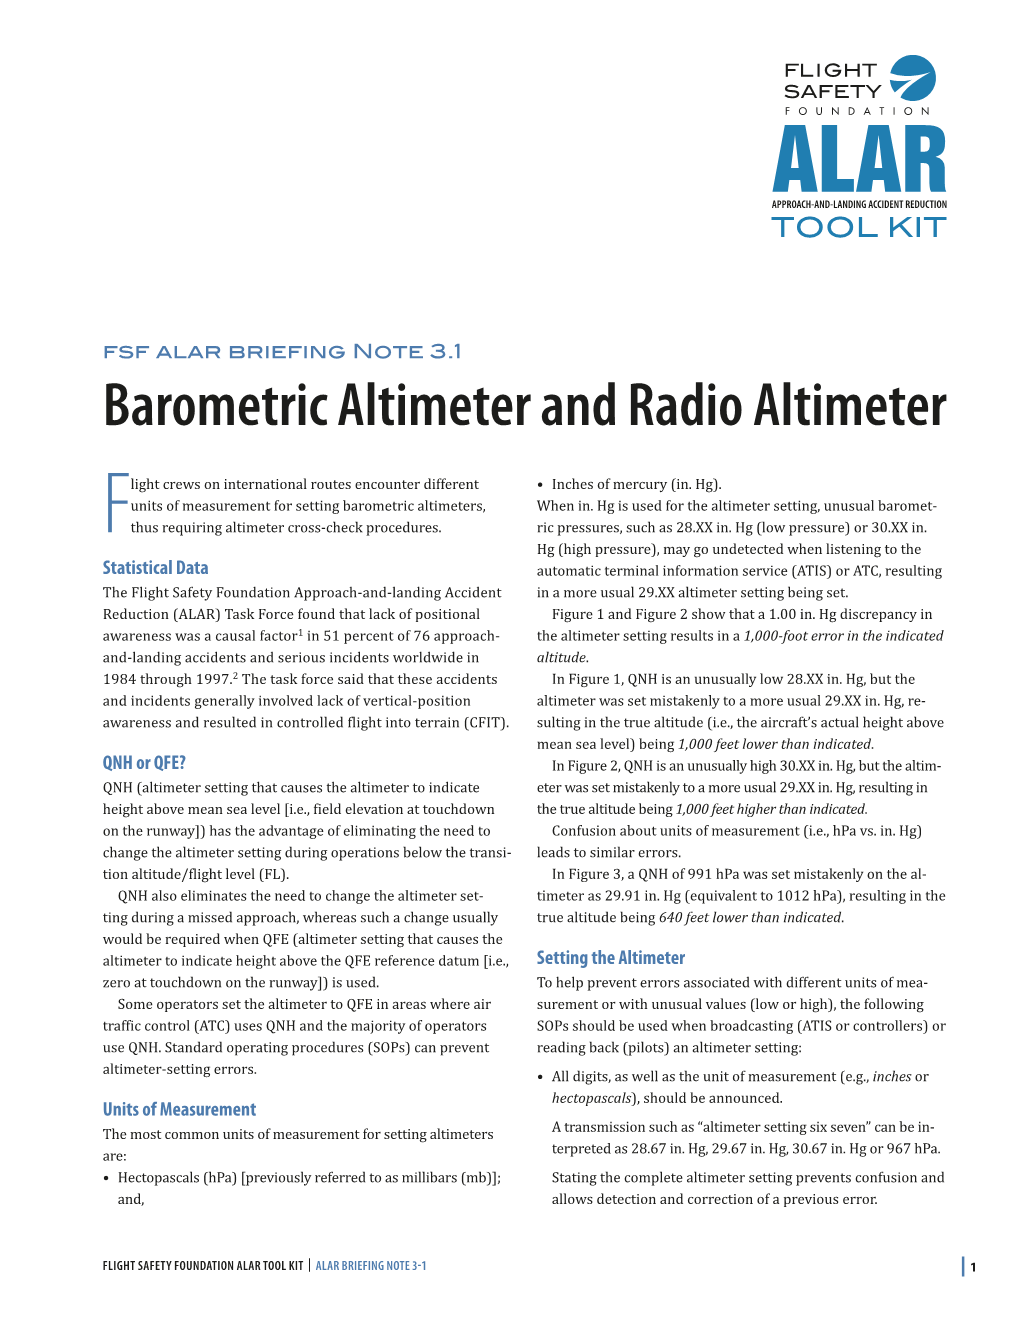 FSF ALAR Briefing Note 3.1: Barometric Altimeter and Radio